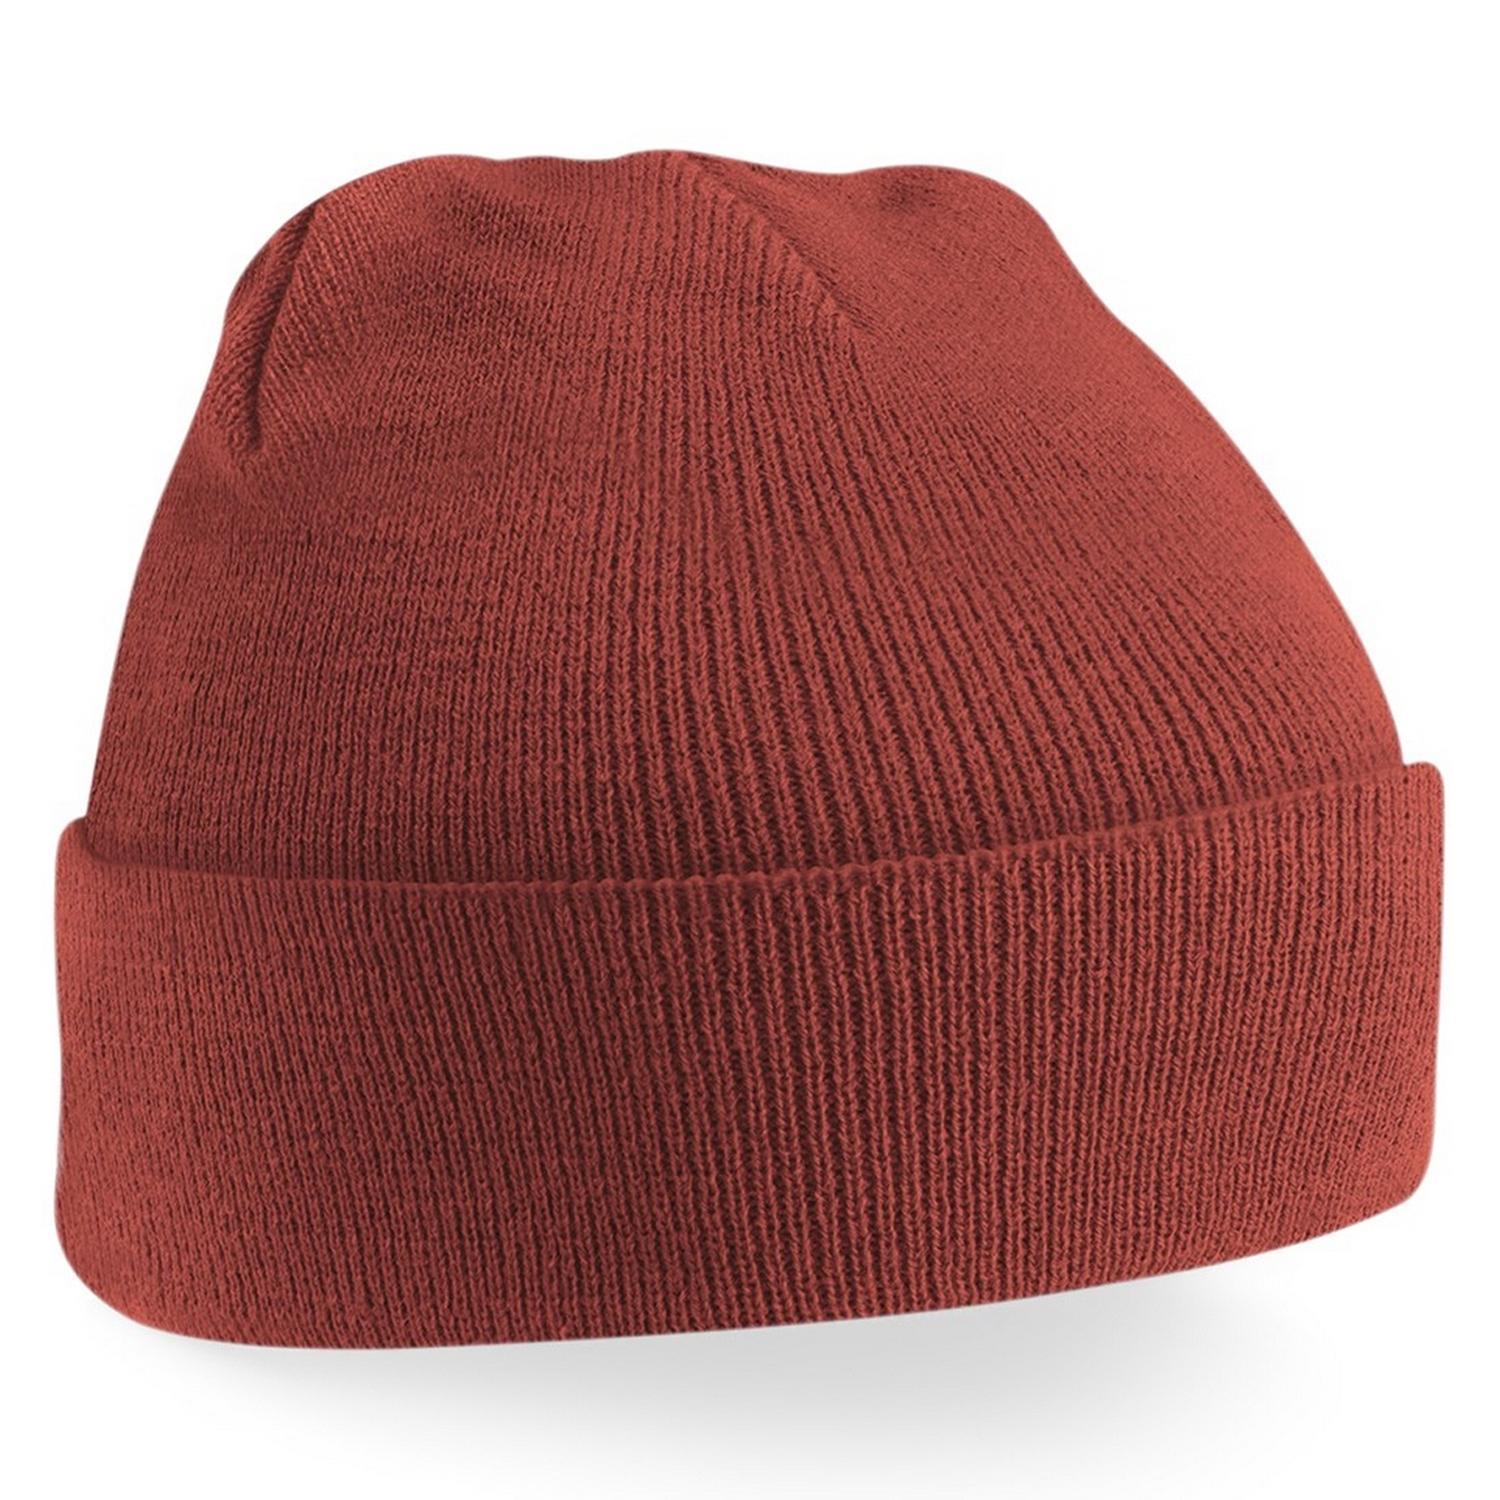 Beechfield Soft Feel Knitted Winter Hat (Rust) (One Size)